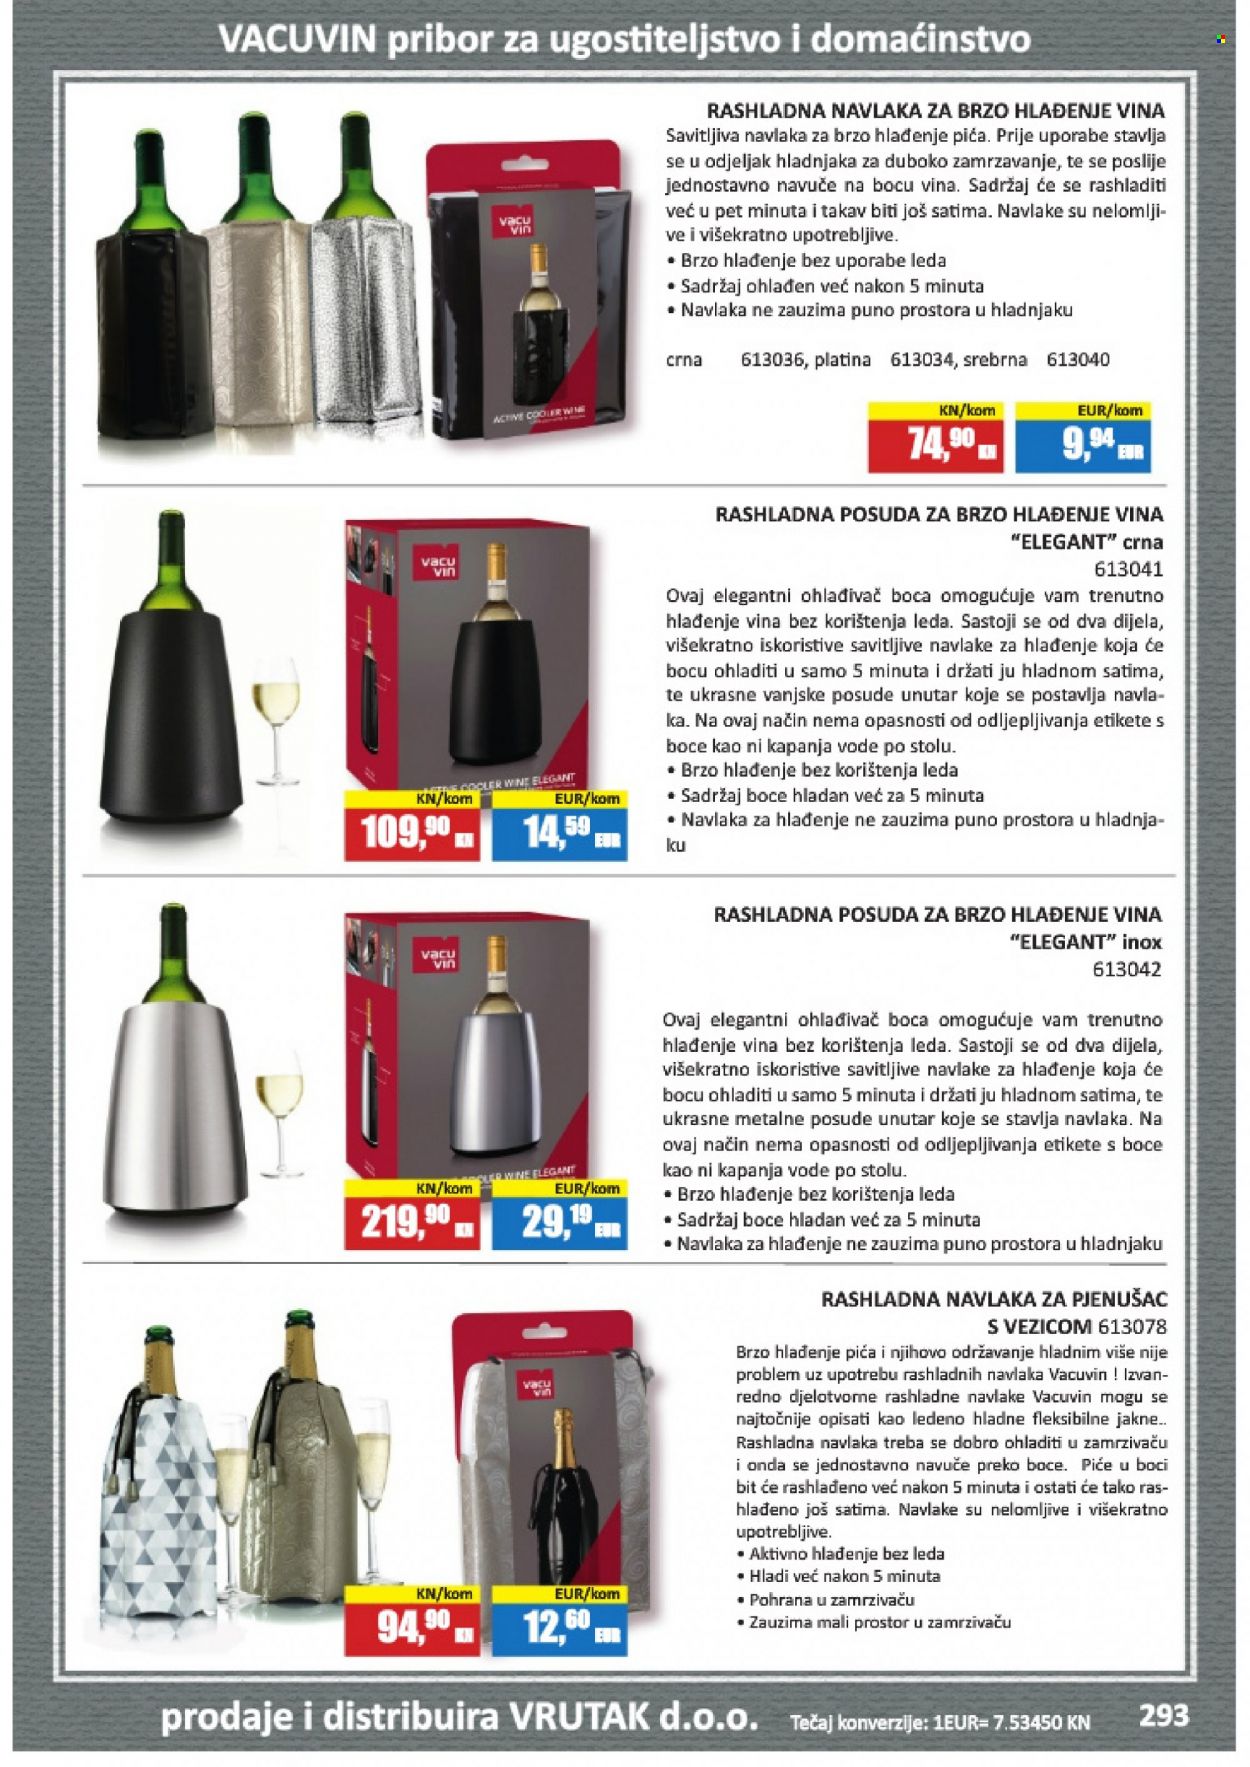 thumbnail - Vrutak katalog - Sniženi proizvodi - DOBRO, pjenušavo vino, boca za piće, posuda za hlađenje pića. Stranica 293.